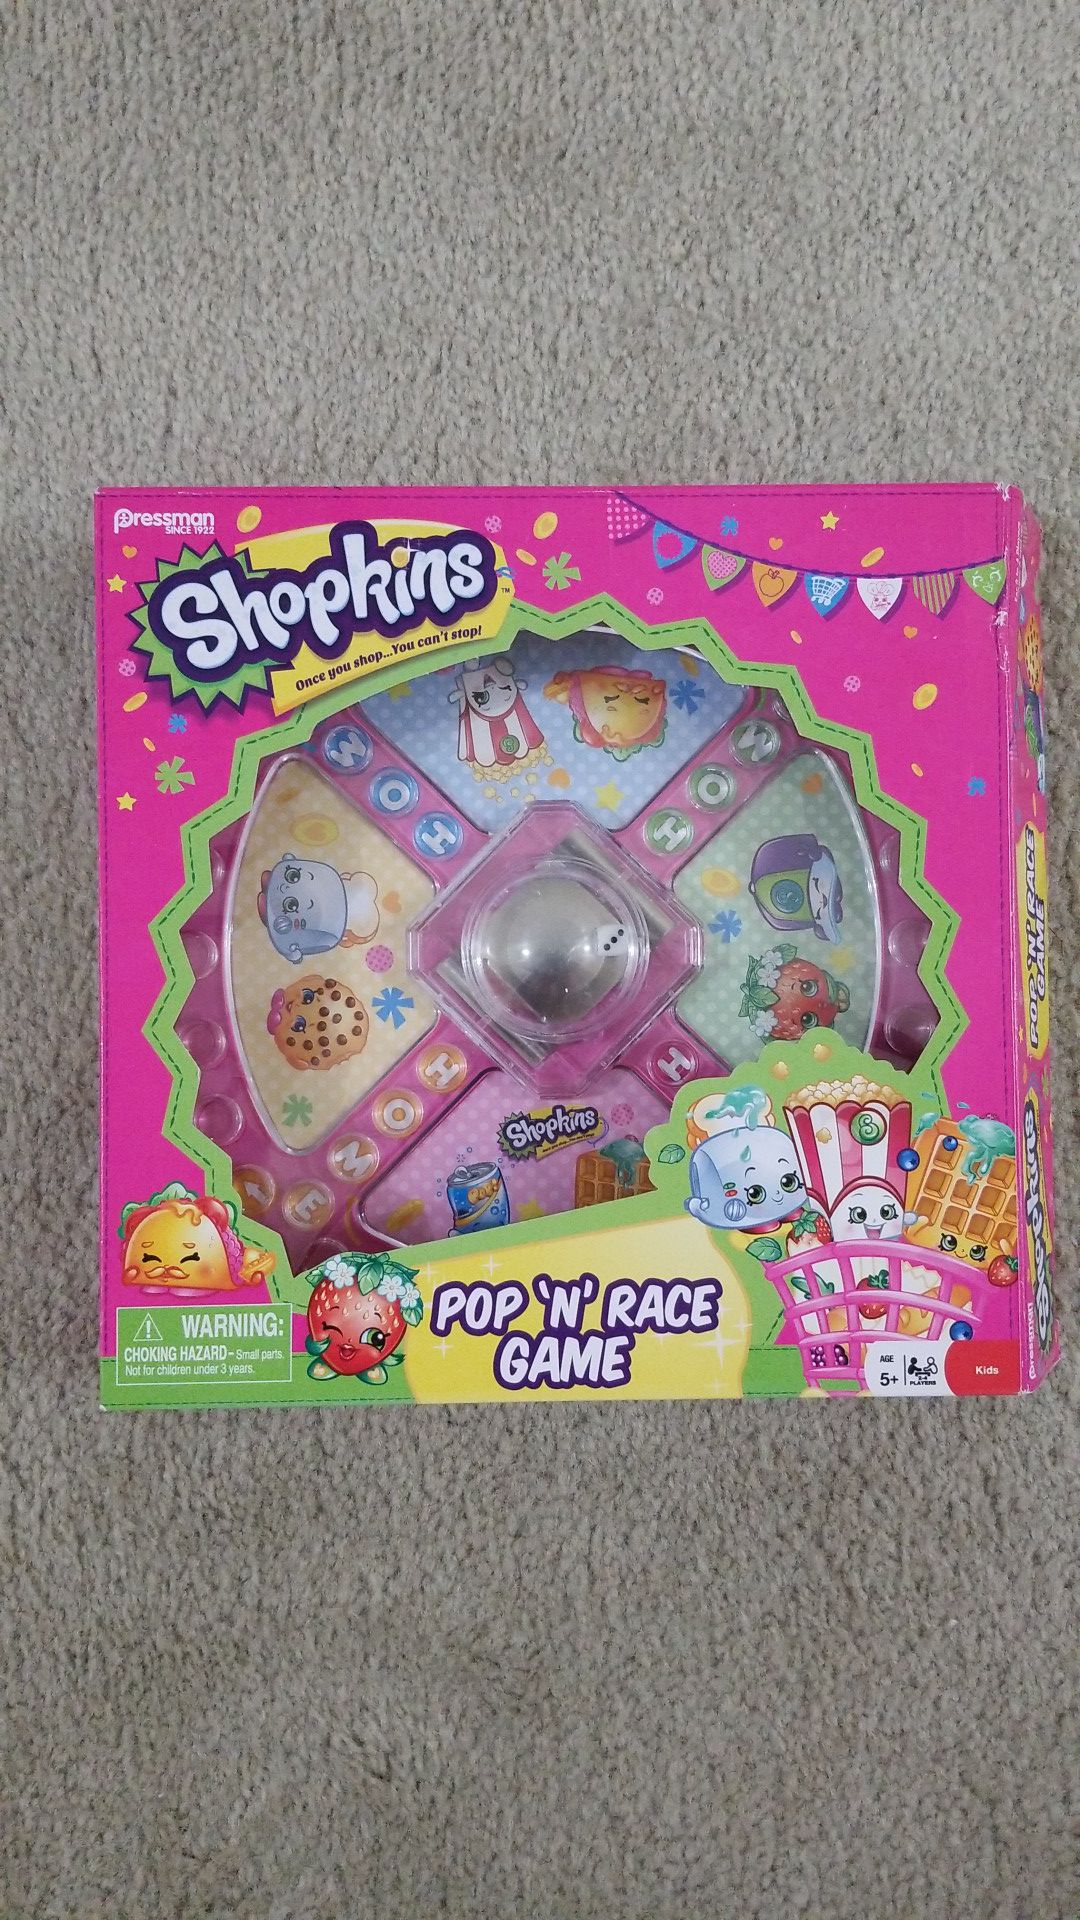 Shopkins Pop 'N' Race Game